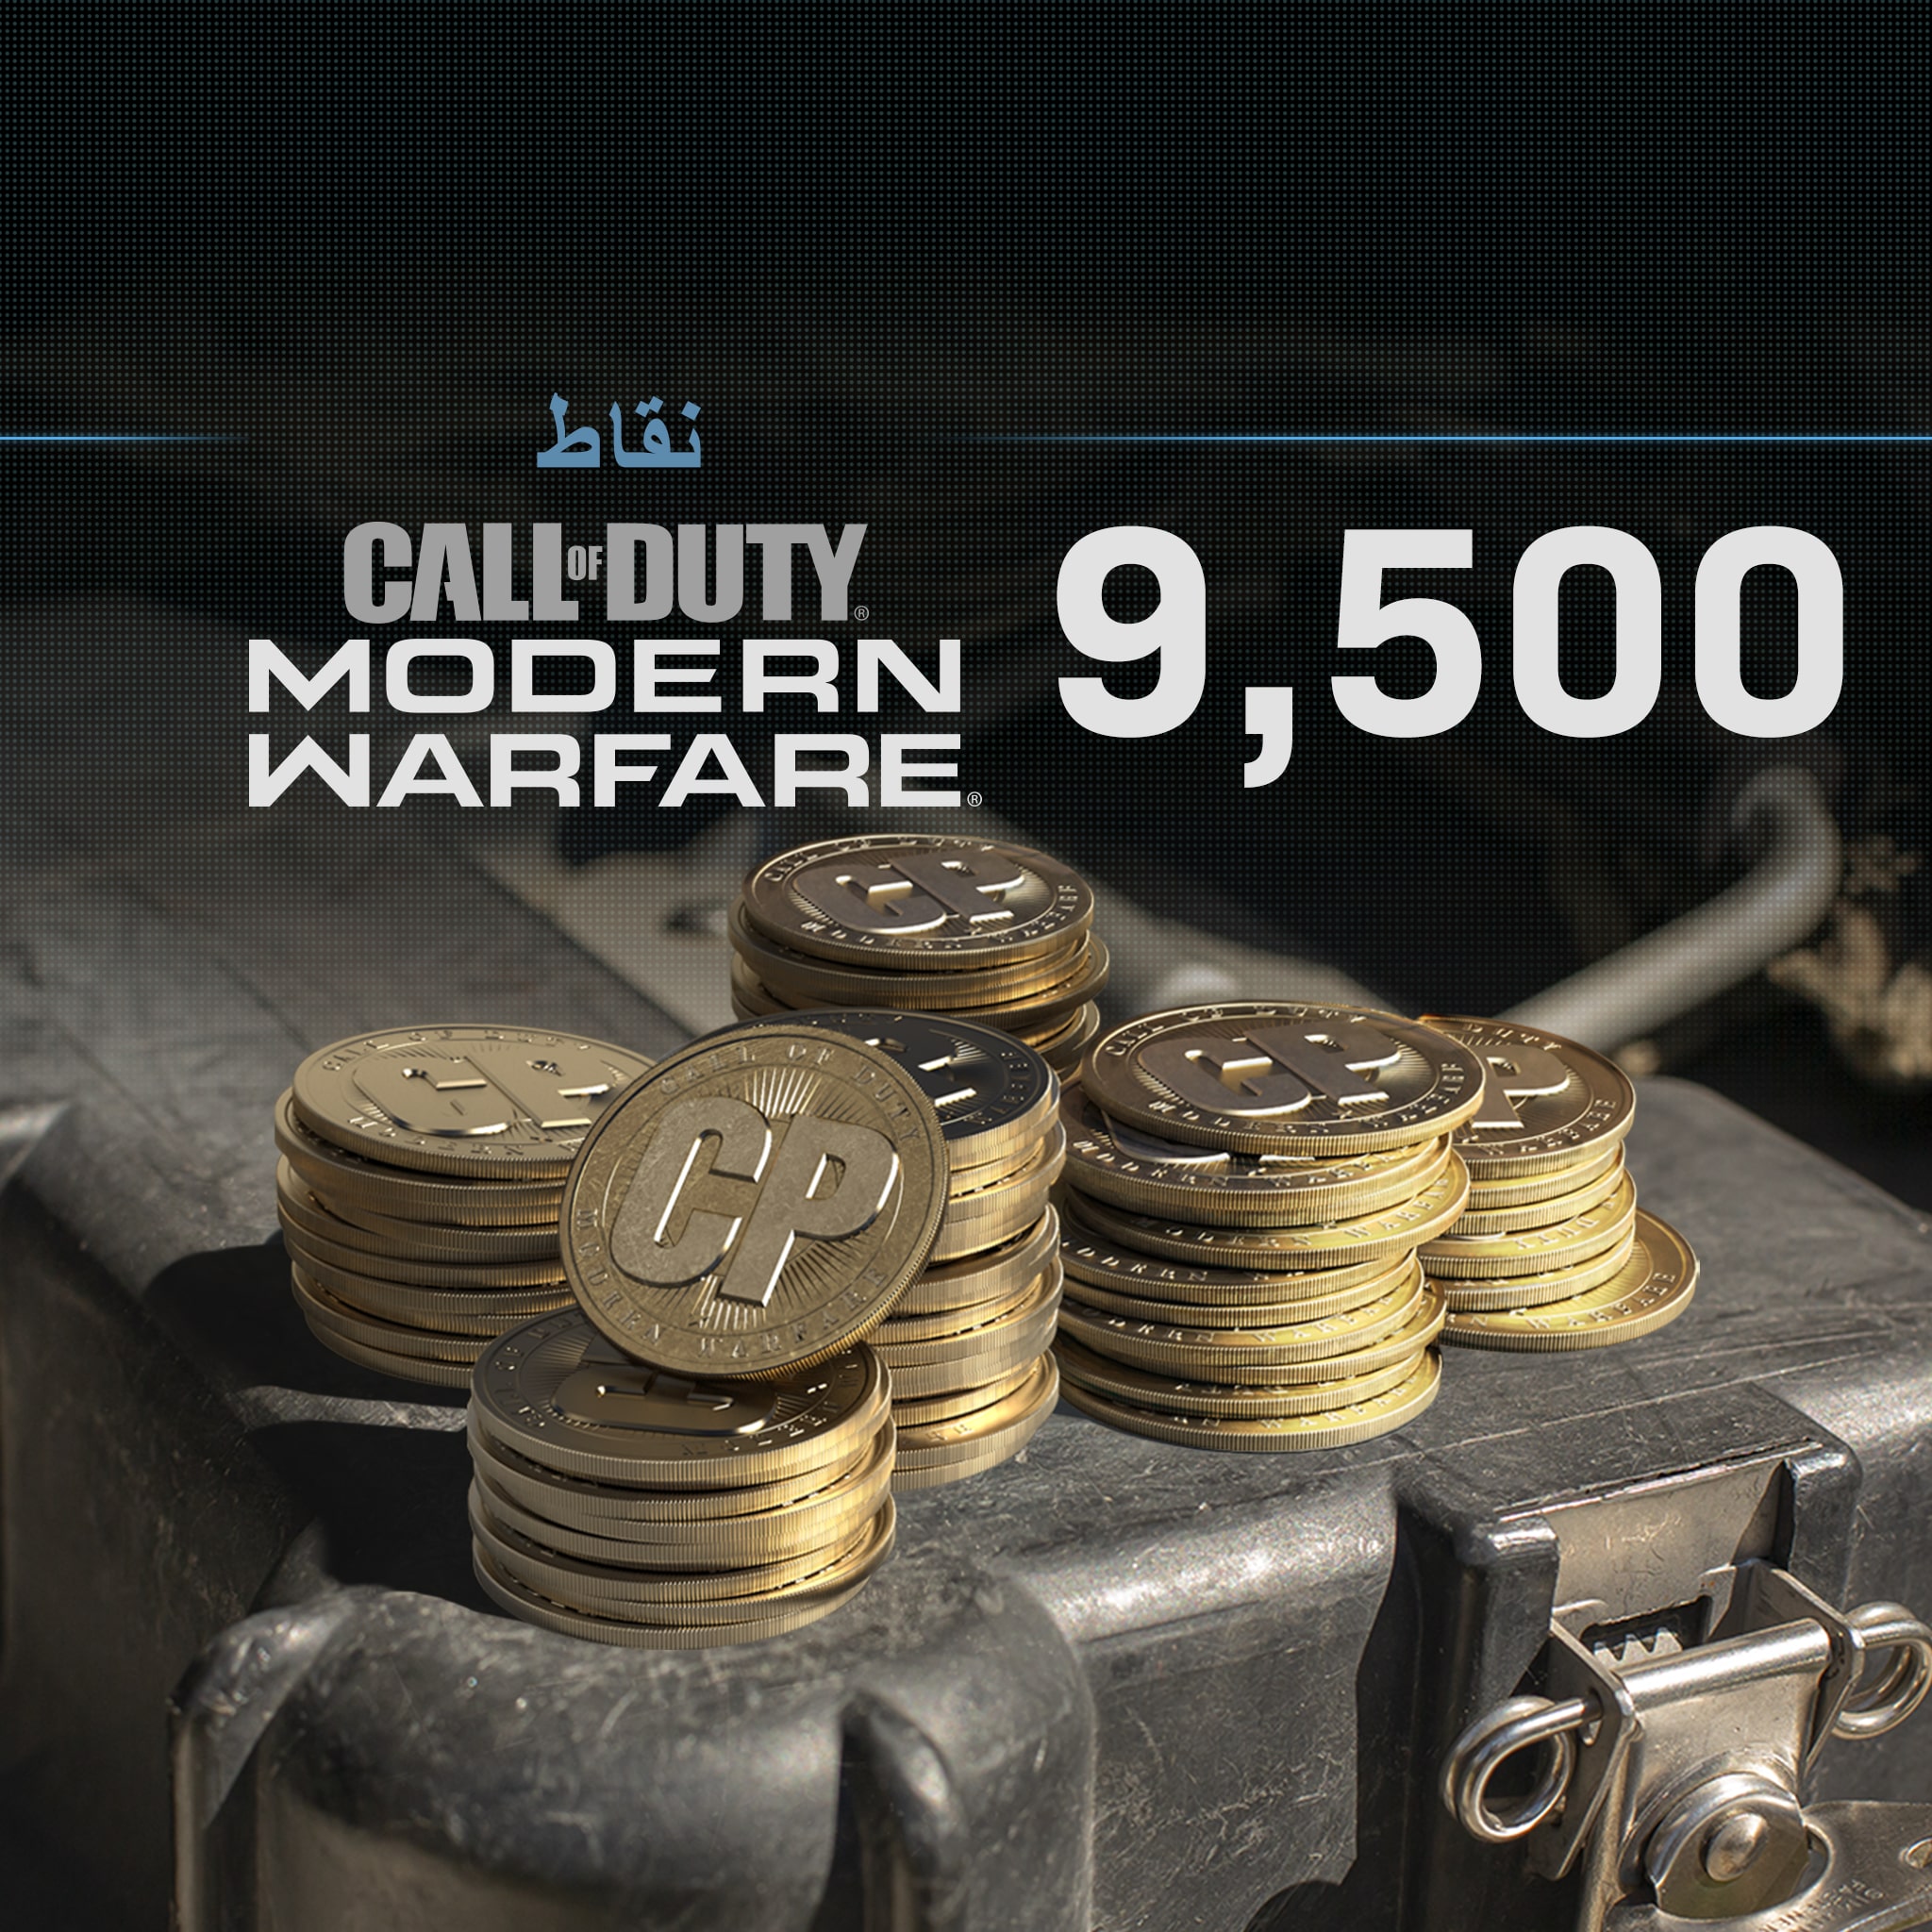 9,500 من نقاط Call of Duty®: Modern Warfare®